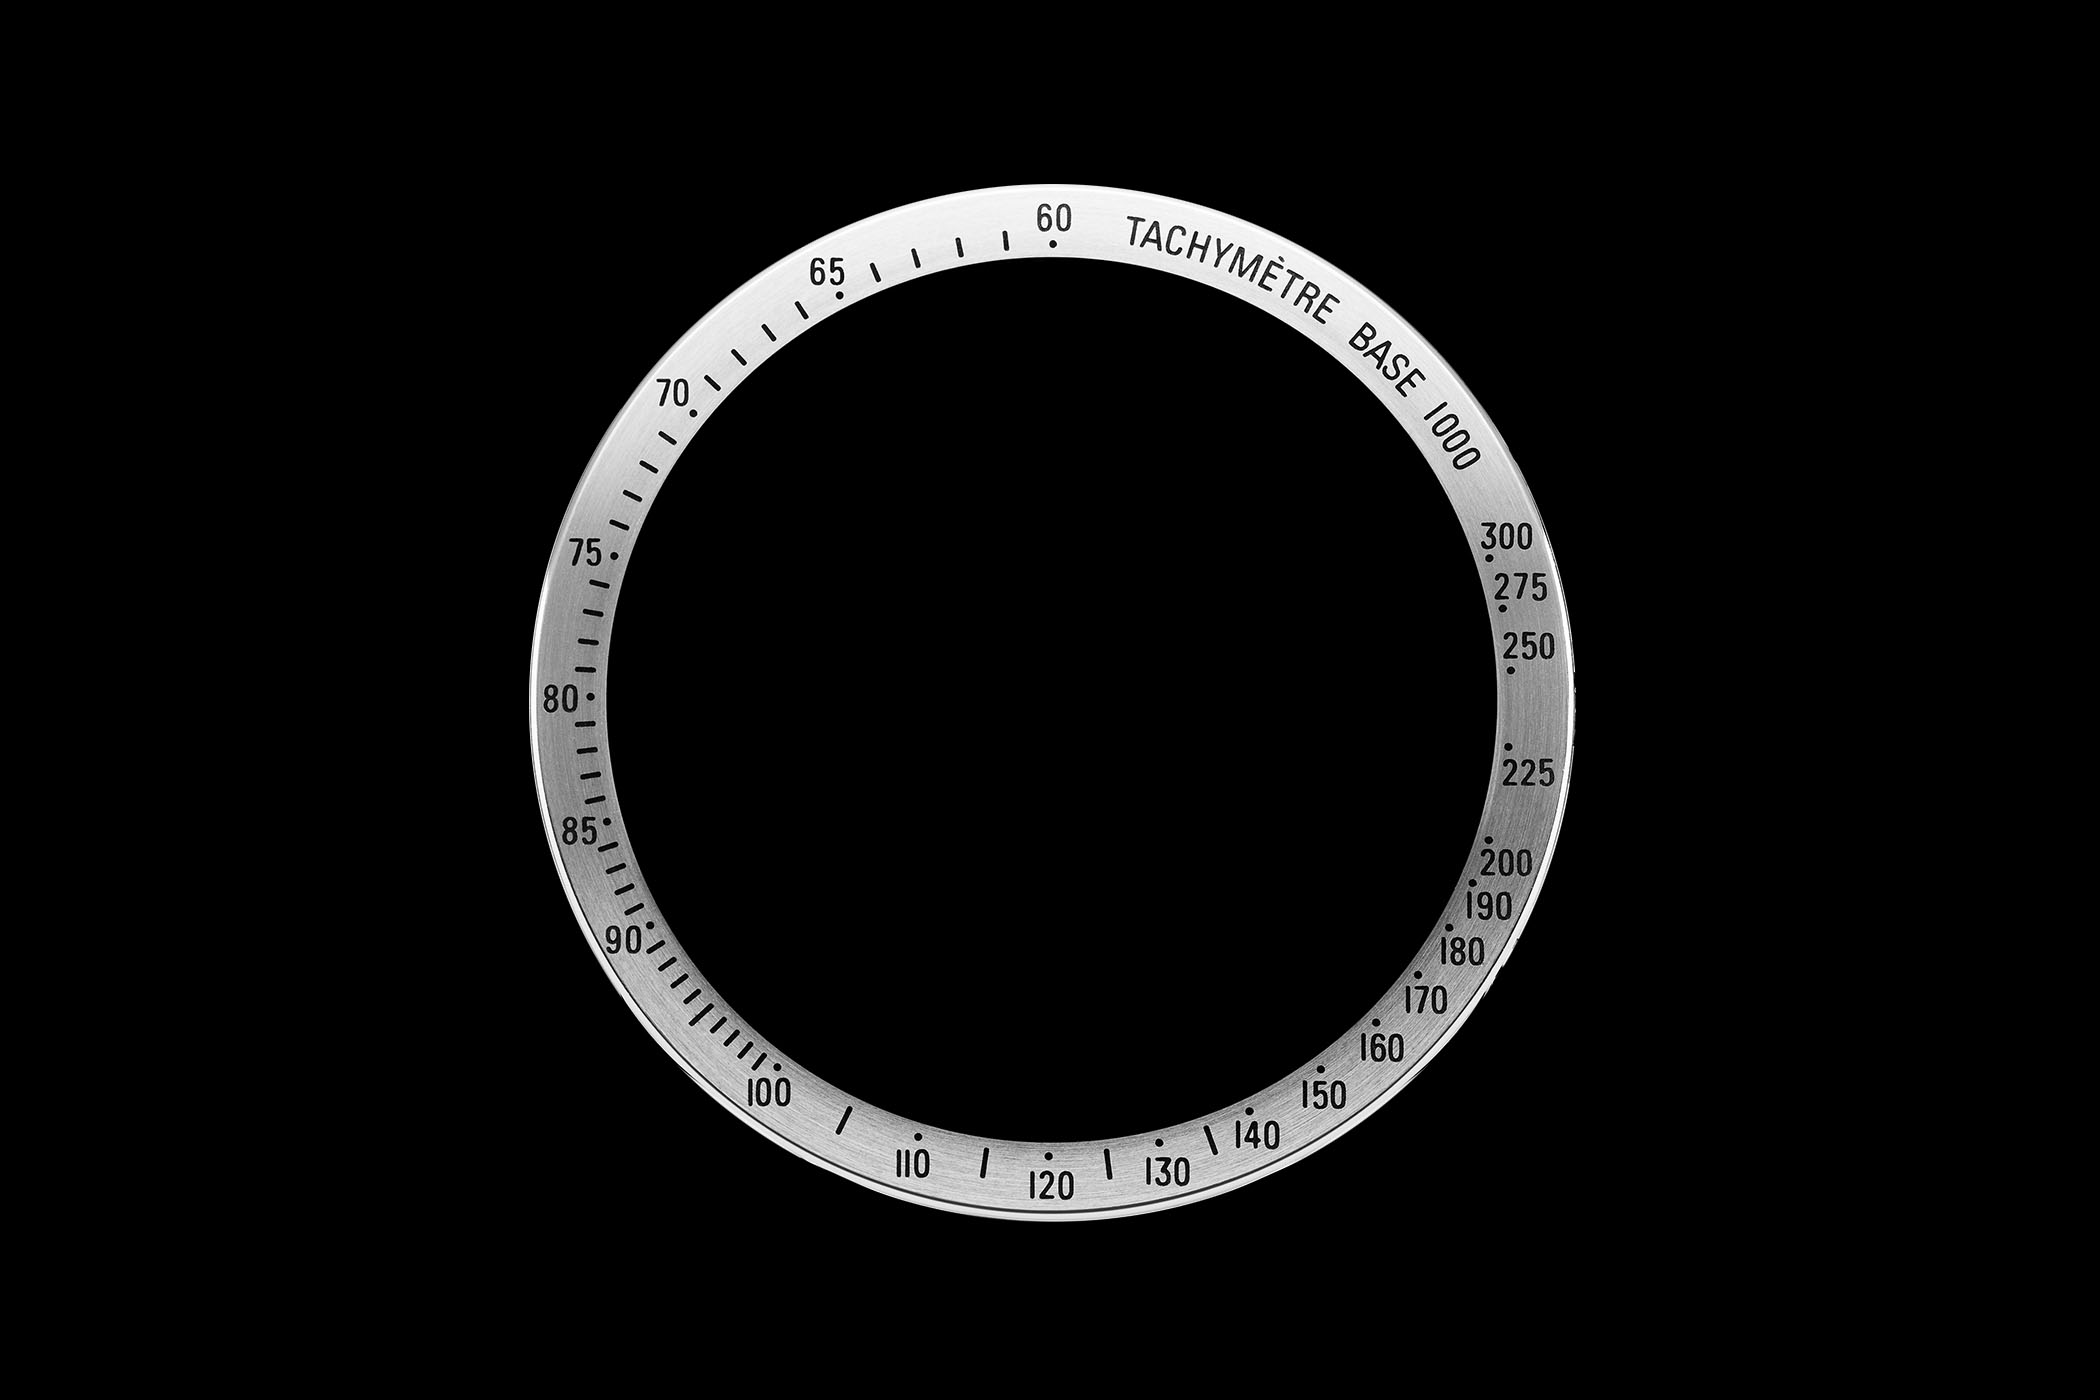 Understanding-the-scales-on-bezels-tachymeter-1.jpg